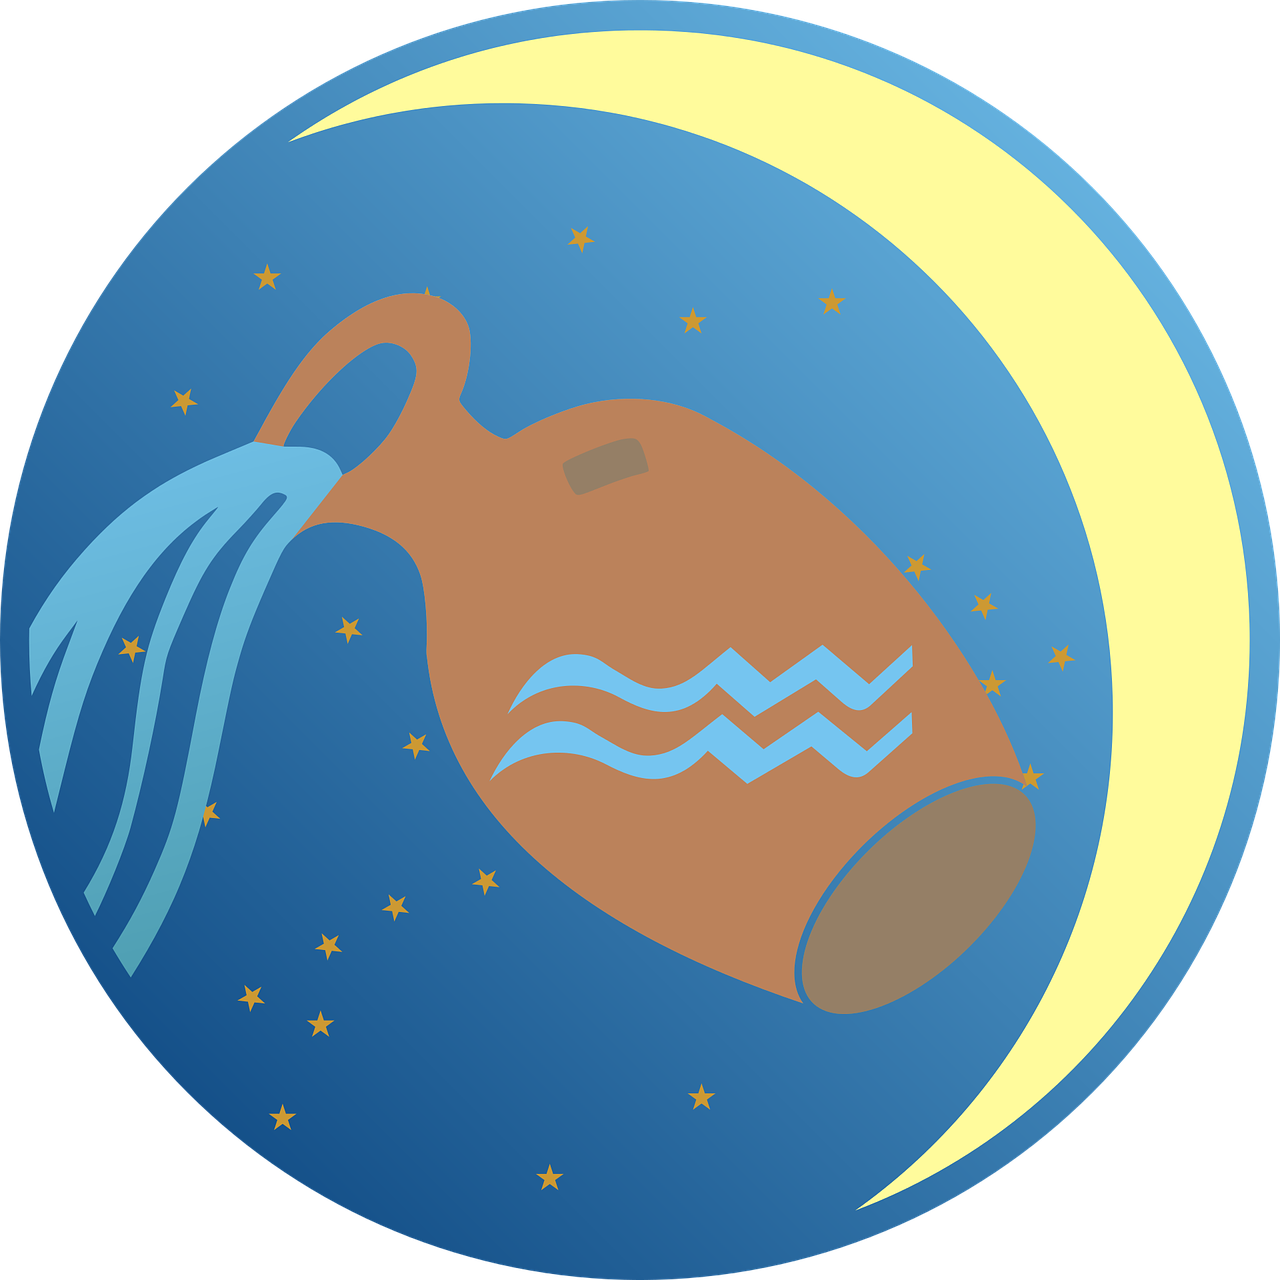 Illustration of the zodiac sign Aquarius | Source: Pixabay